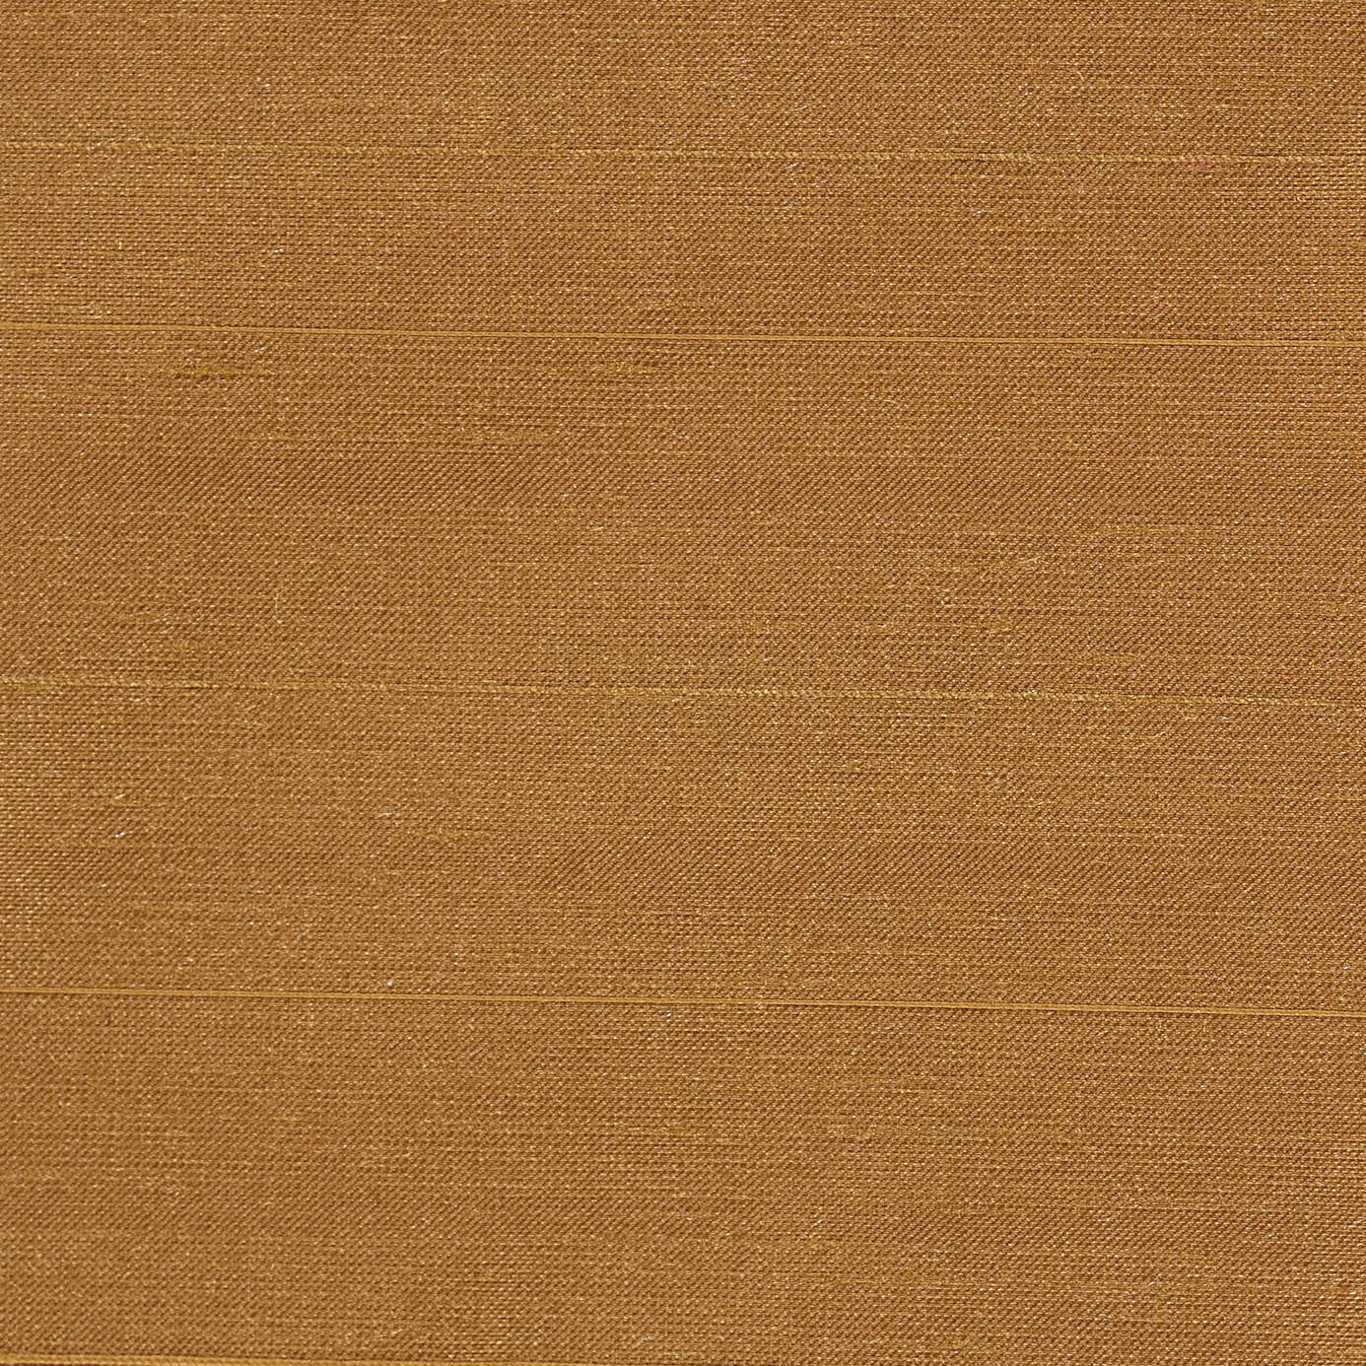 Deflect Fabric by Harlequin - HPOL440426 - Cinnamon